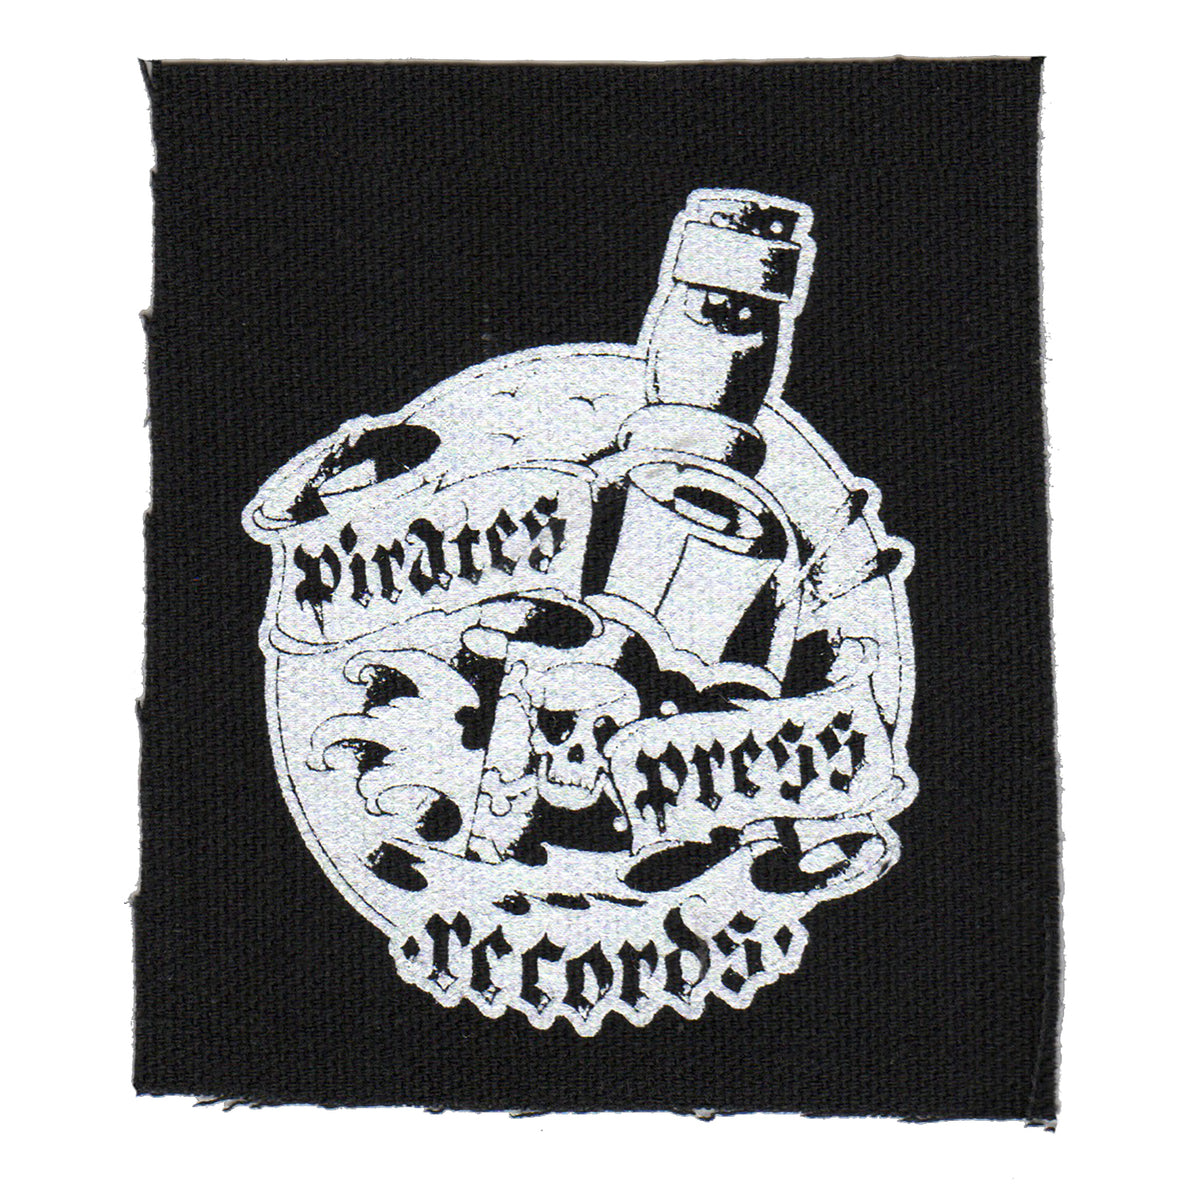 Pirates Press Records - Bottle - Black - Patch - Cloth - Screenprinted - 4&quot; x 4&quot;